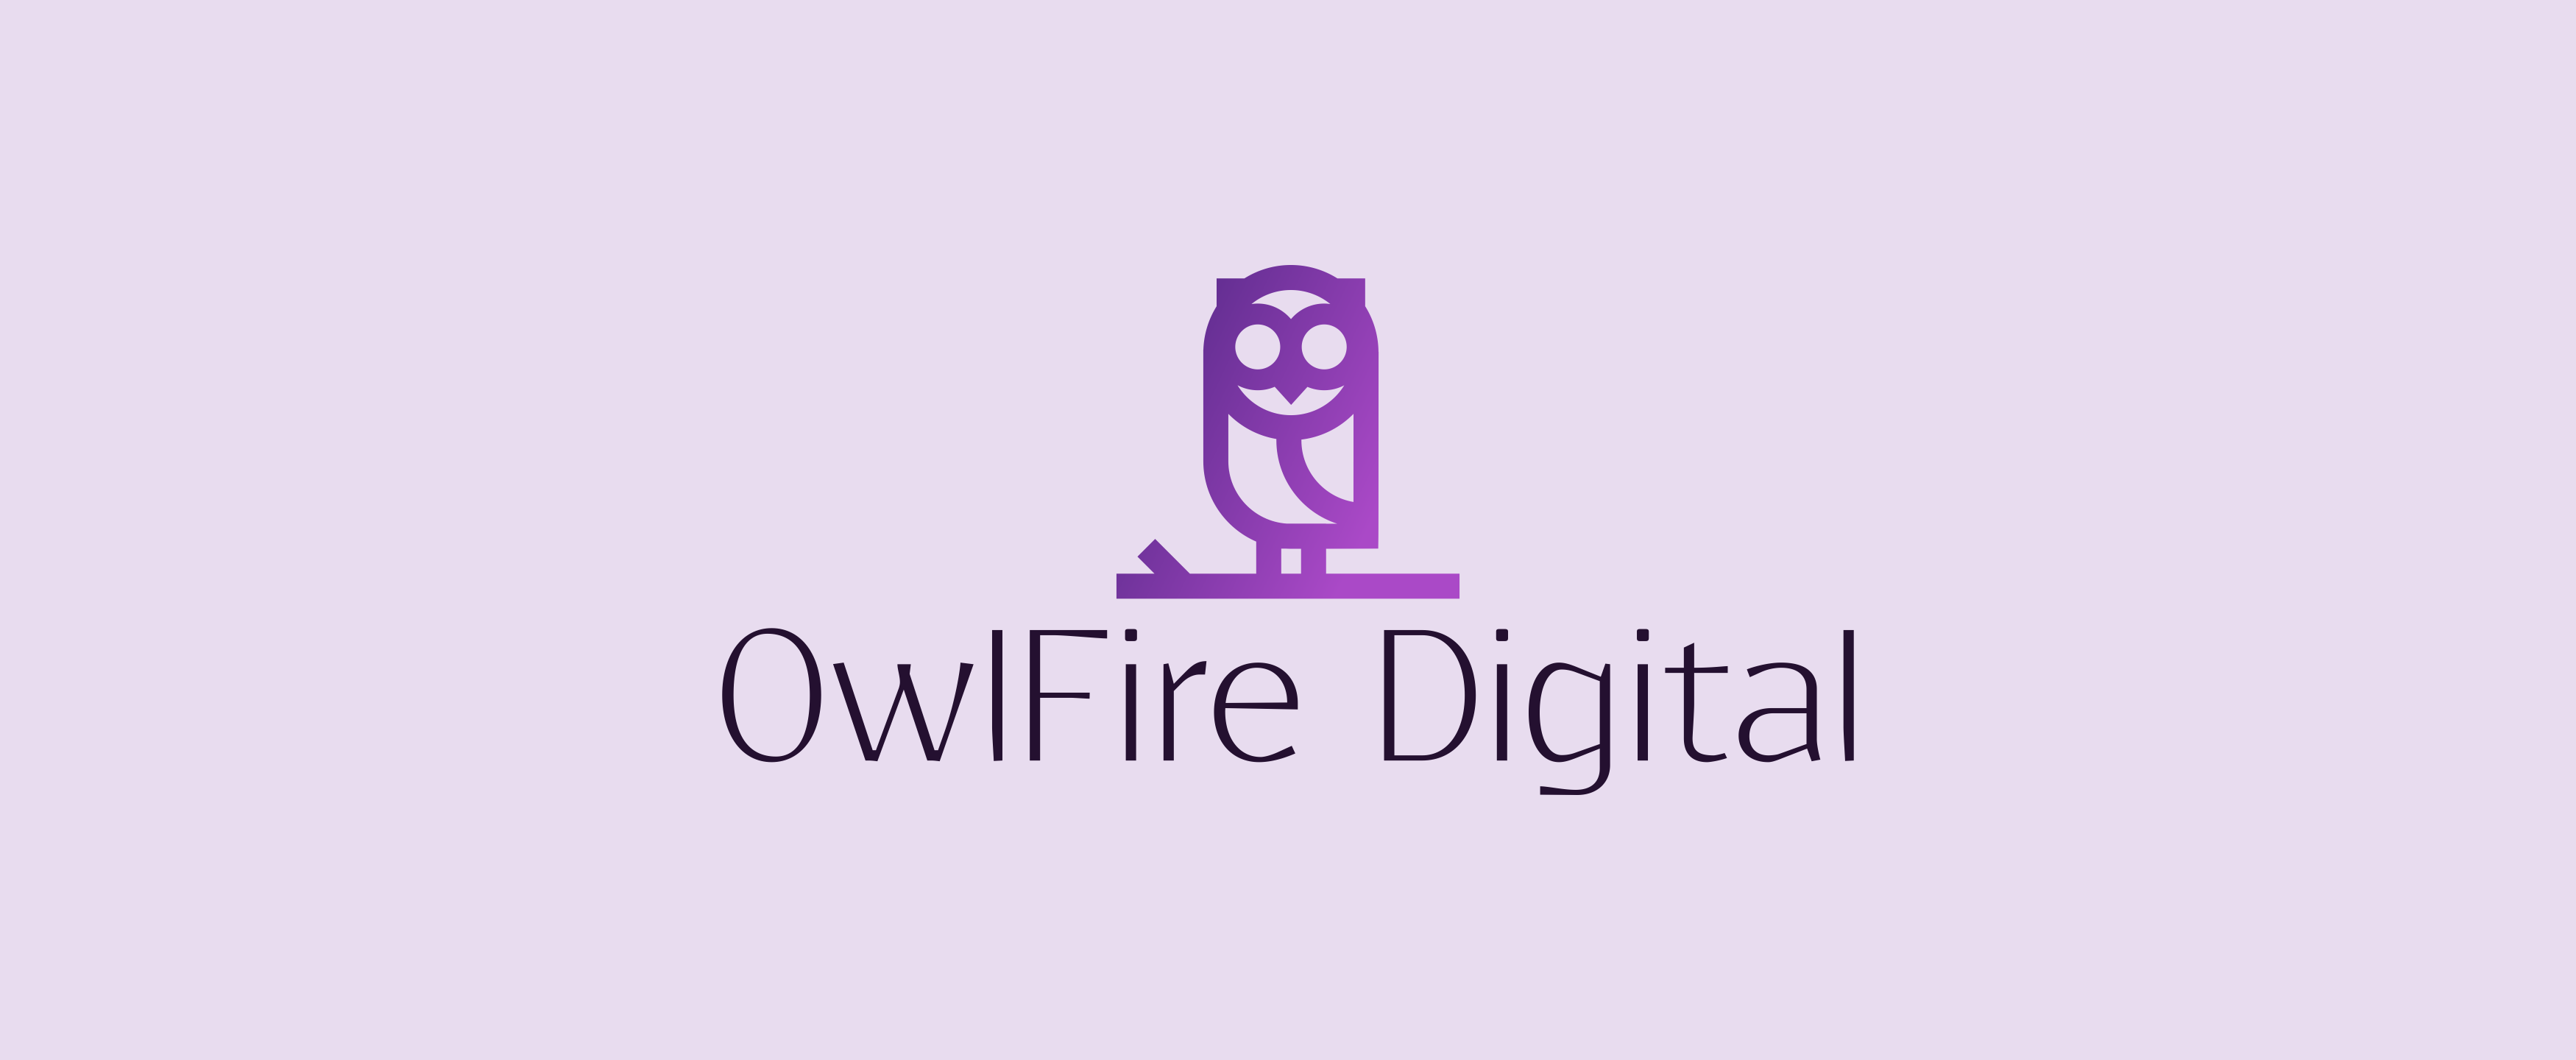 OwlFire Digital Brand Identity and Logos feature-image